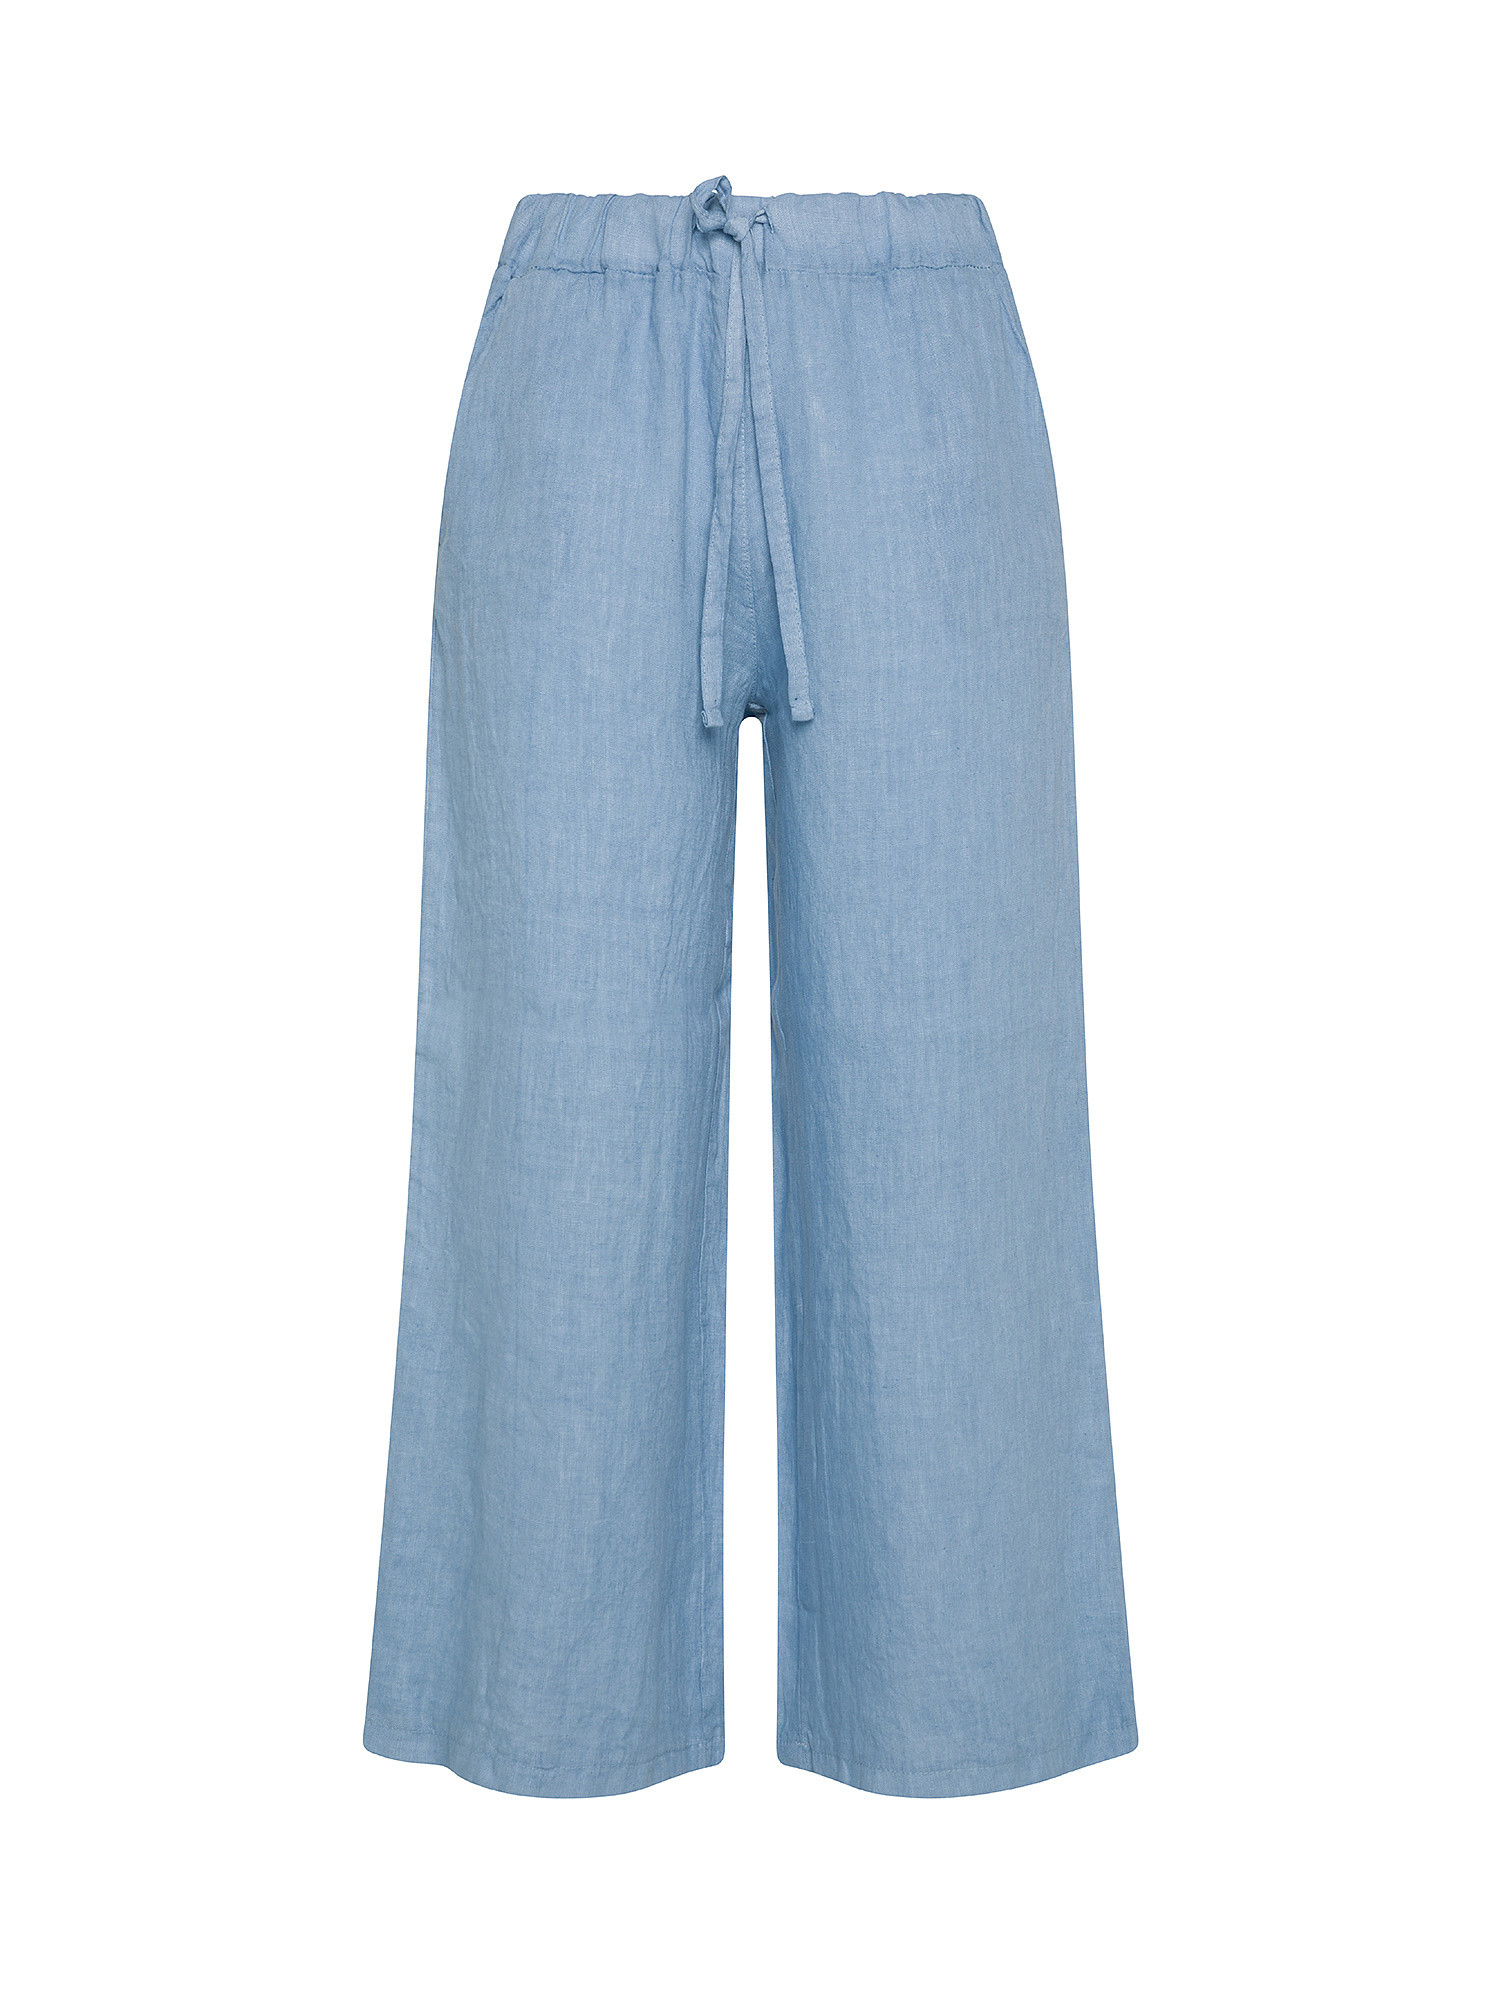 Koan - Wide linen trousers, Denim, large image number 0